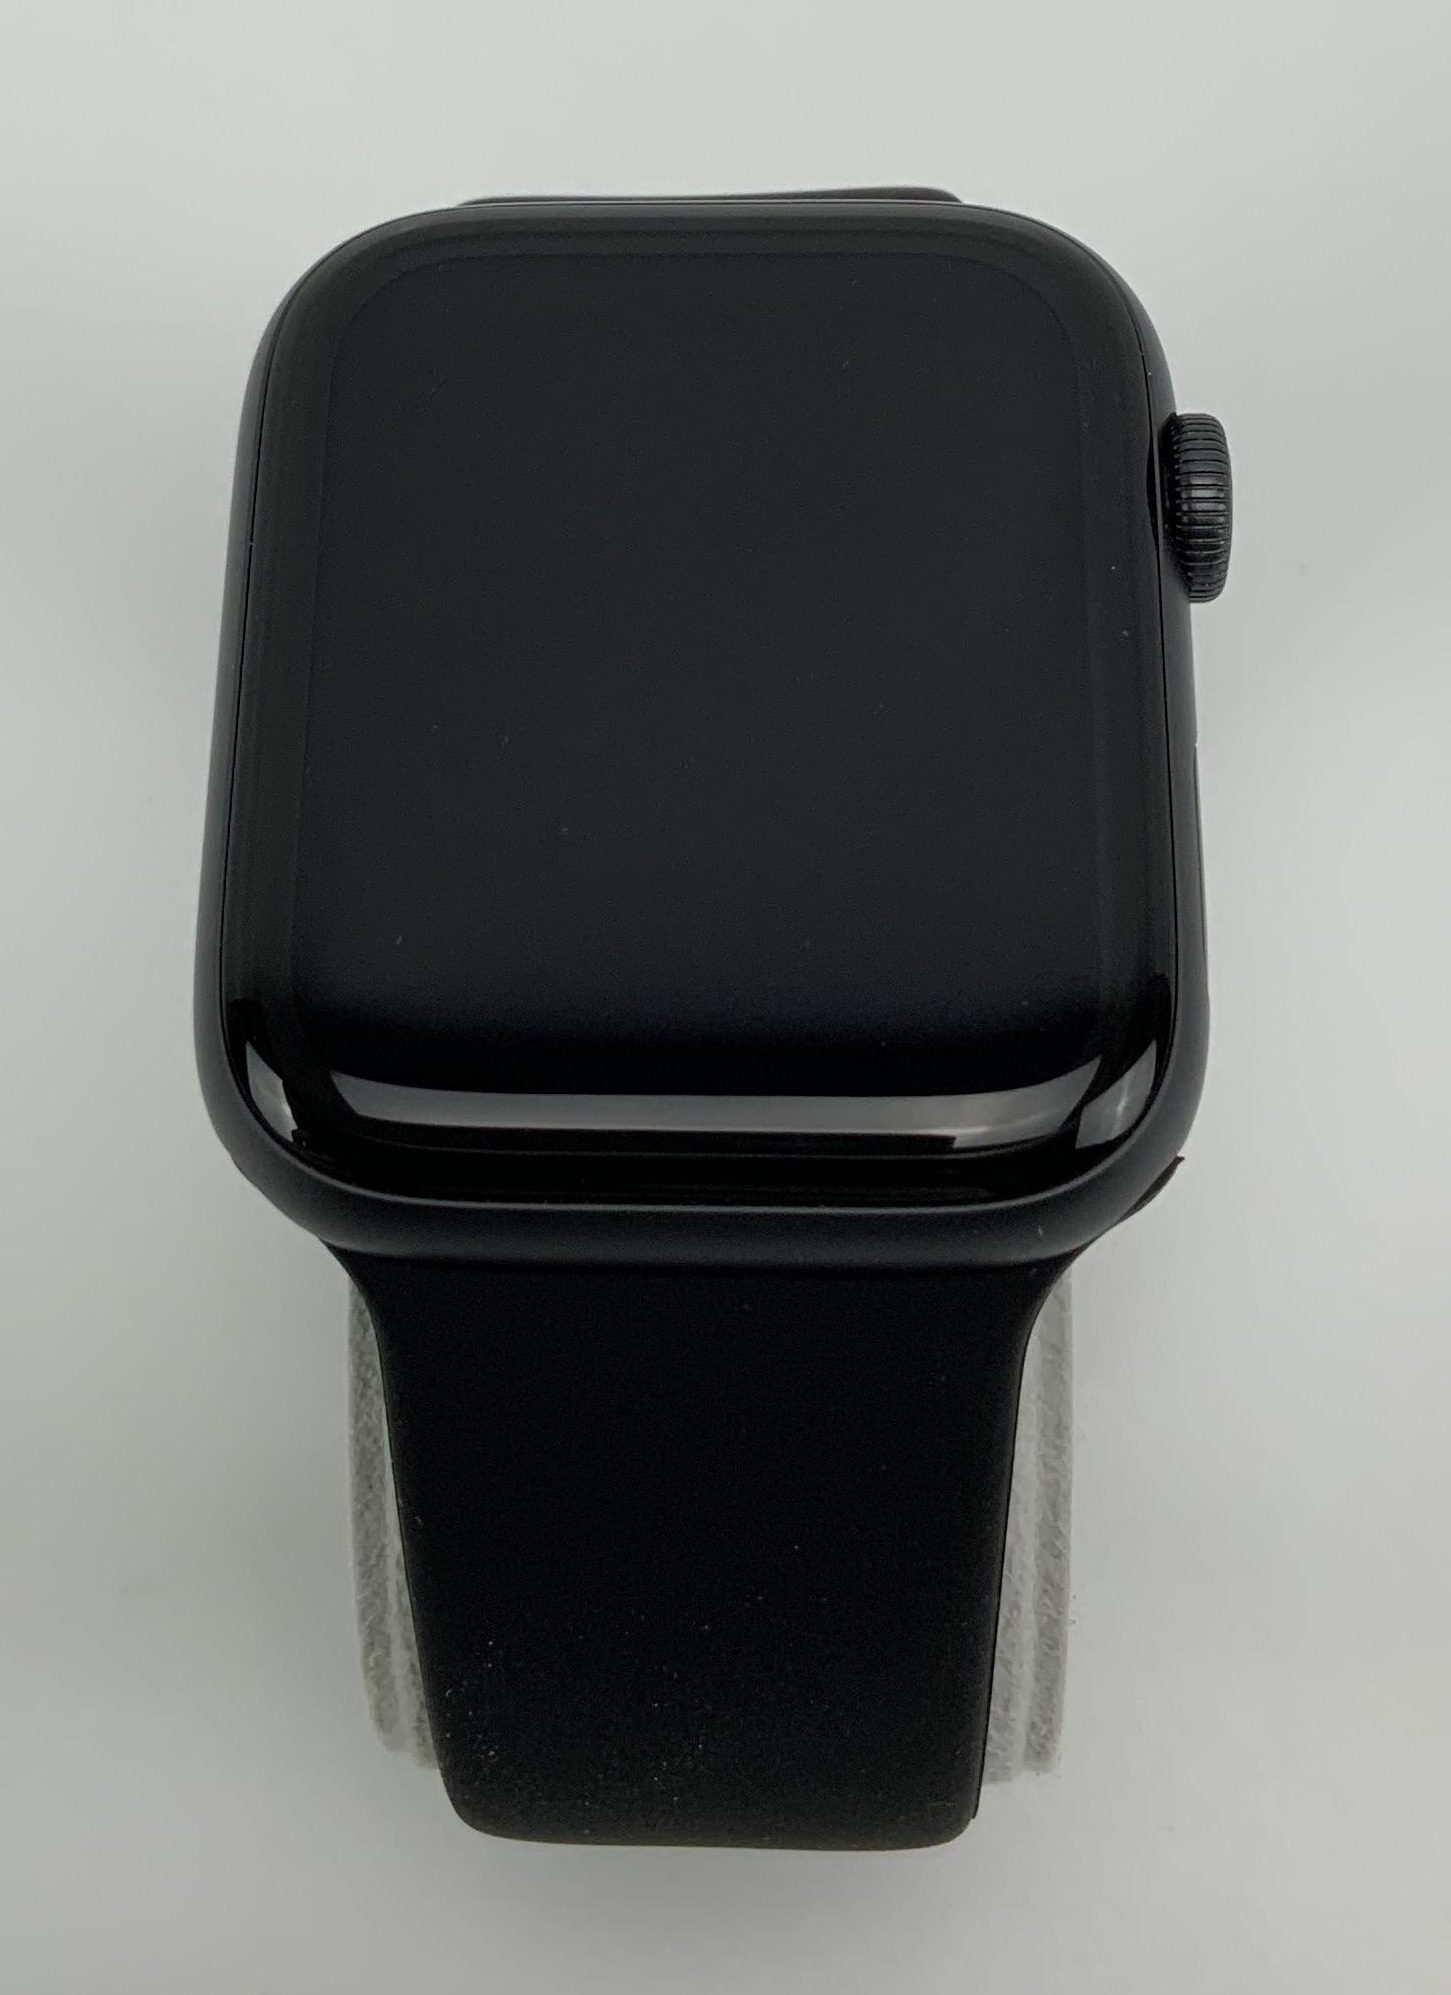 Watch Series 5 Aluminum Cellular (44mm), Space Gray, bild 1